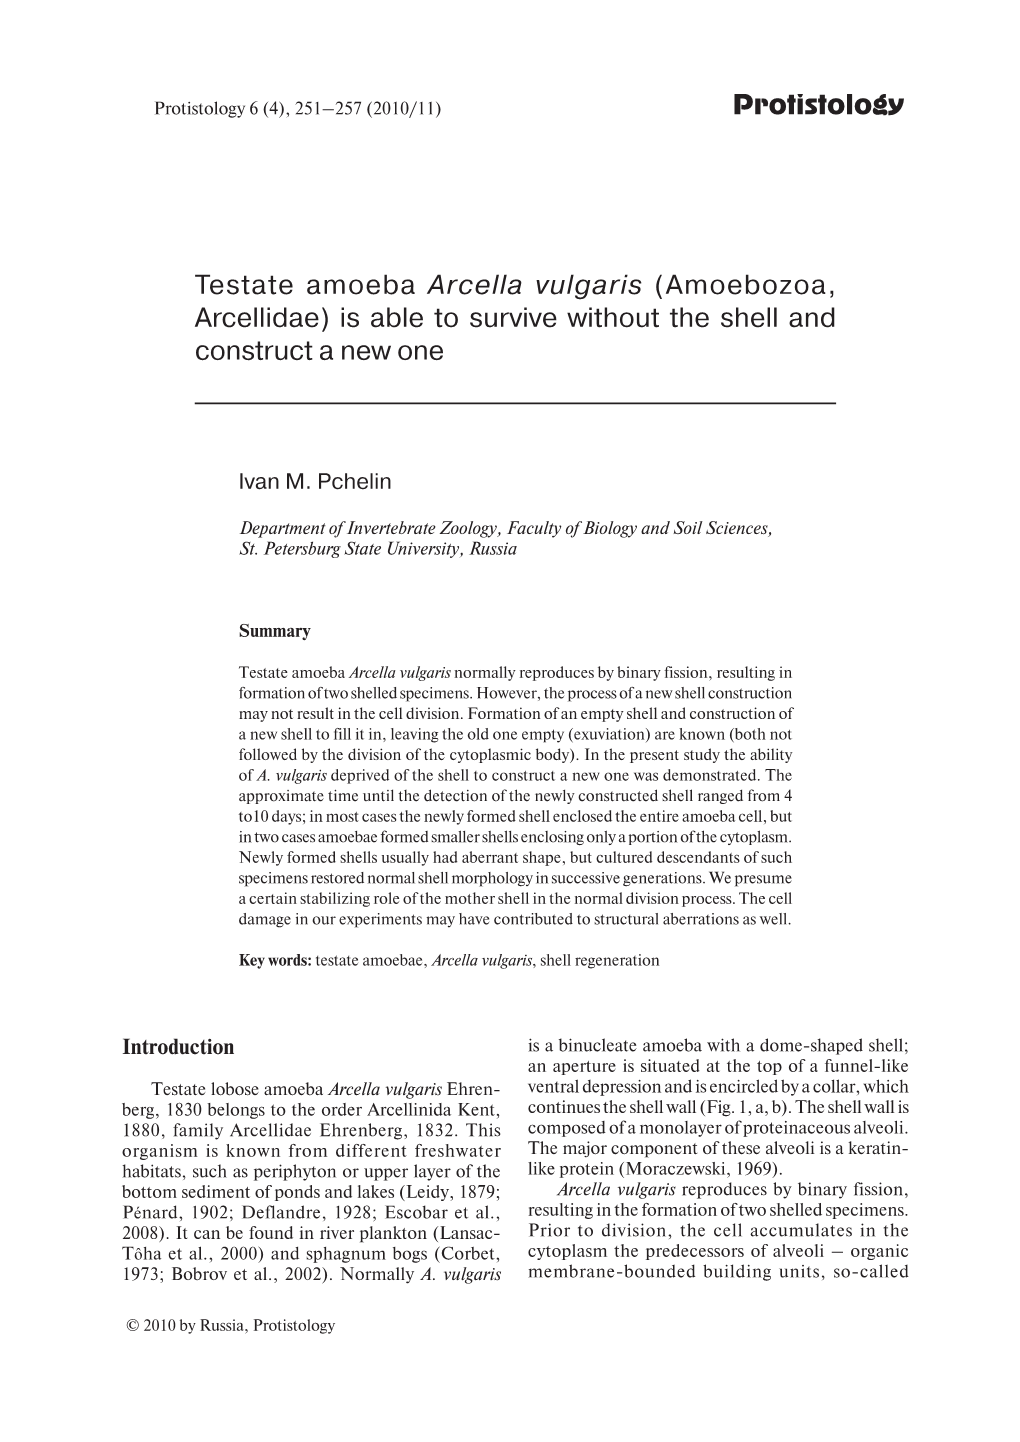 Protistology Testate Amoeba Arcella Vulgaris (Amoebozoa, Arcellidae) Is